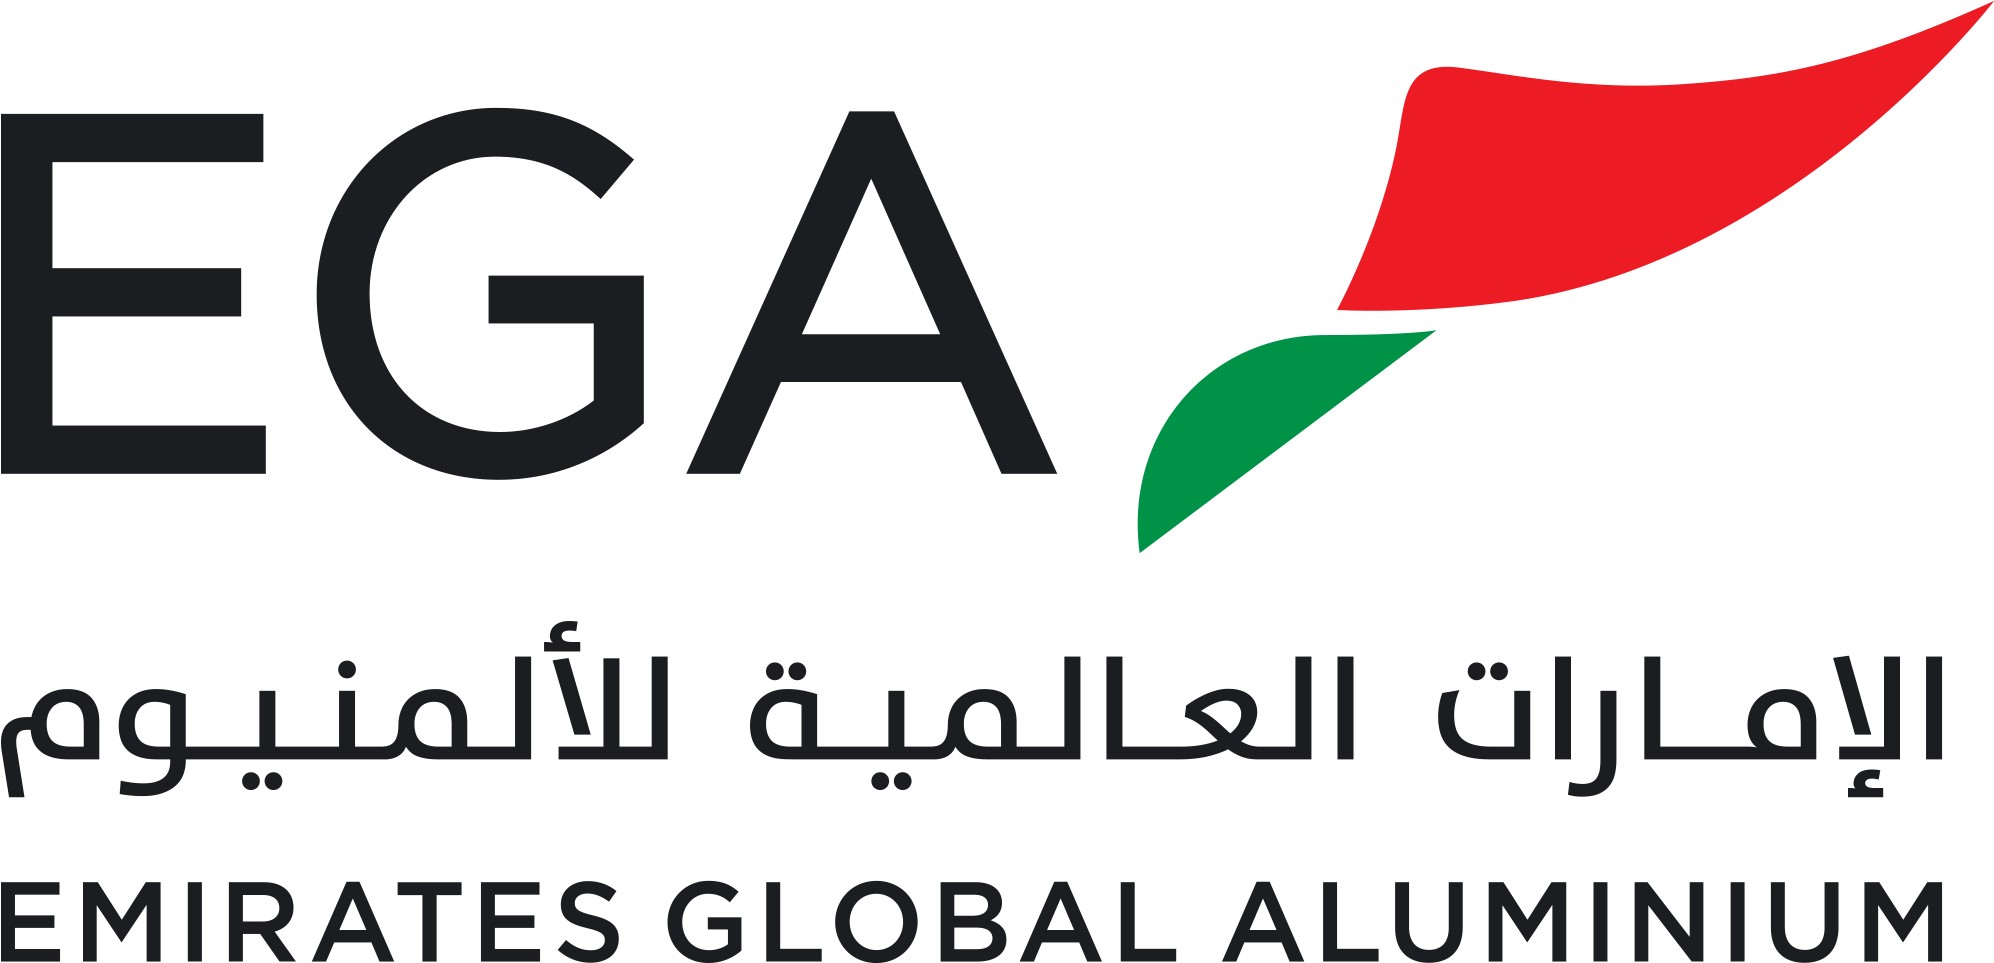 Download Ega Logo Vertical Emirates Global Aluminum Logo Png Image With No Background Pngkey Com